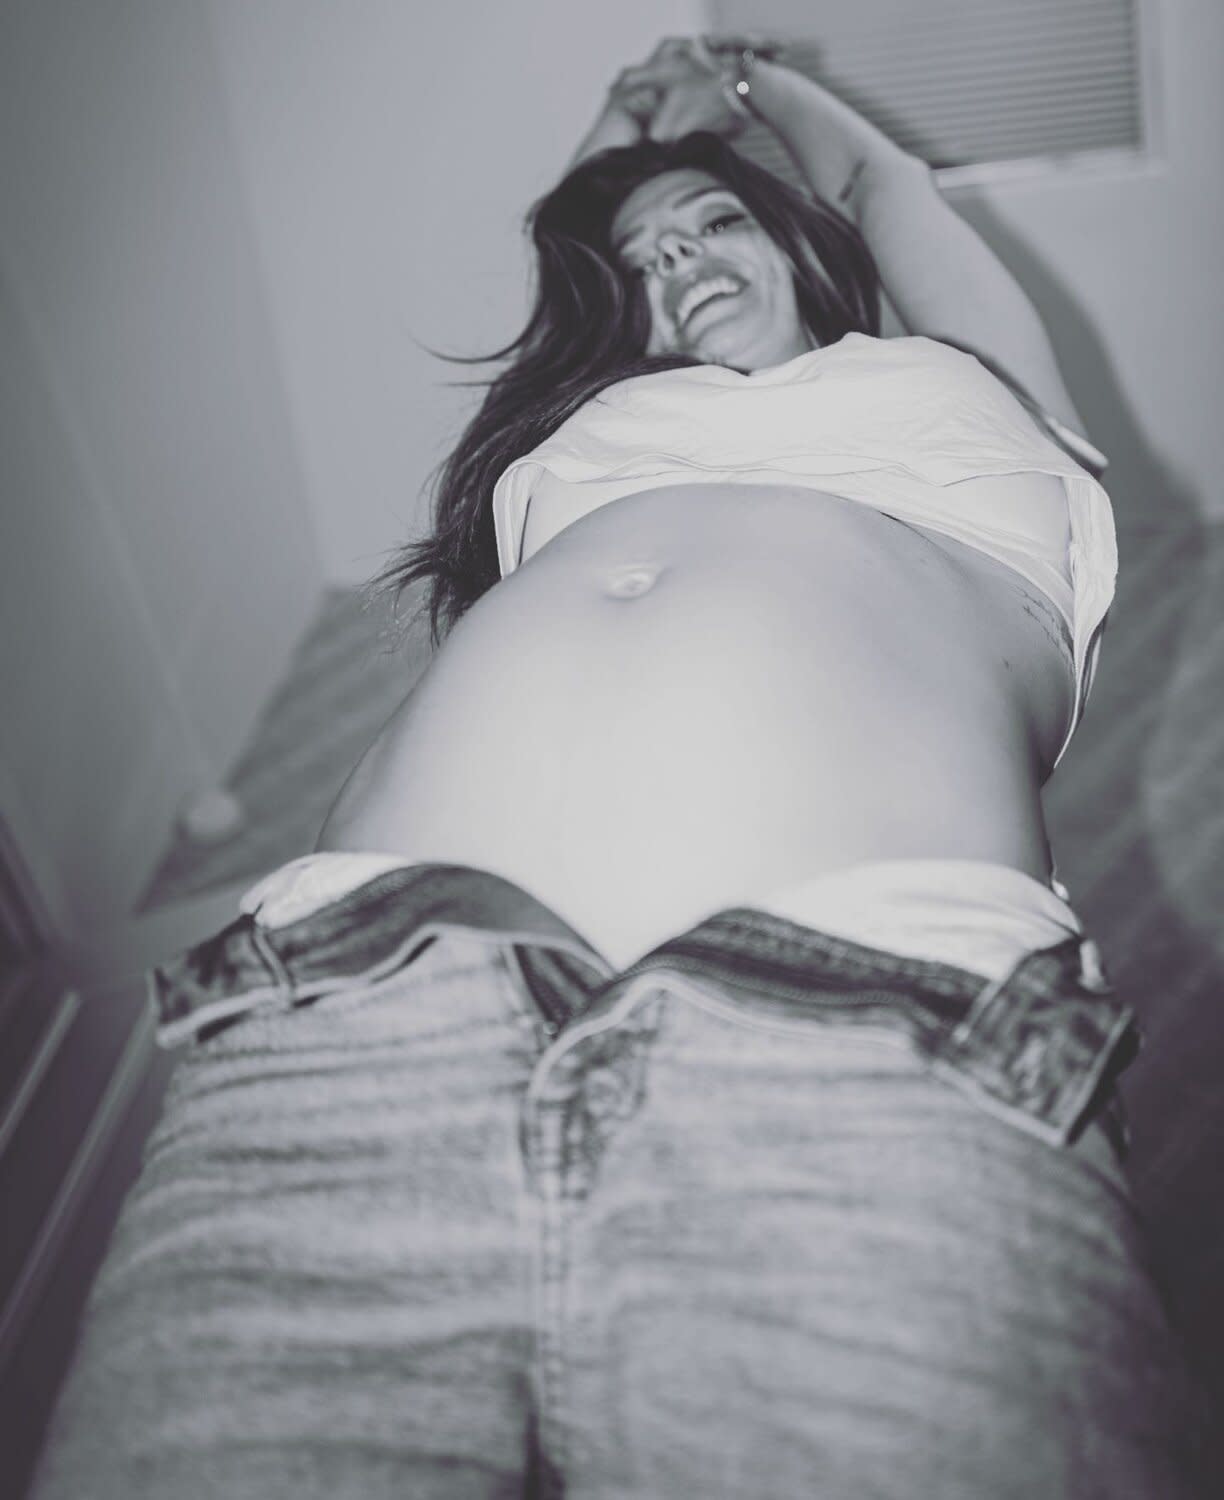 Ashley Greene pregnancy